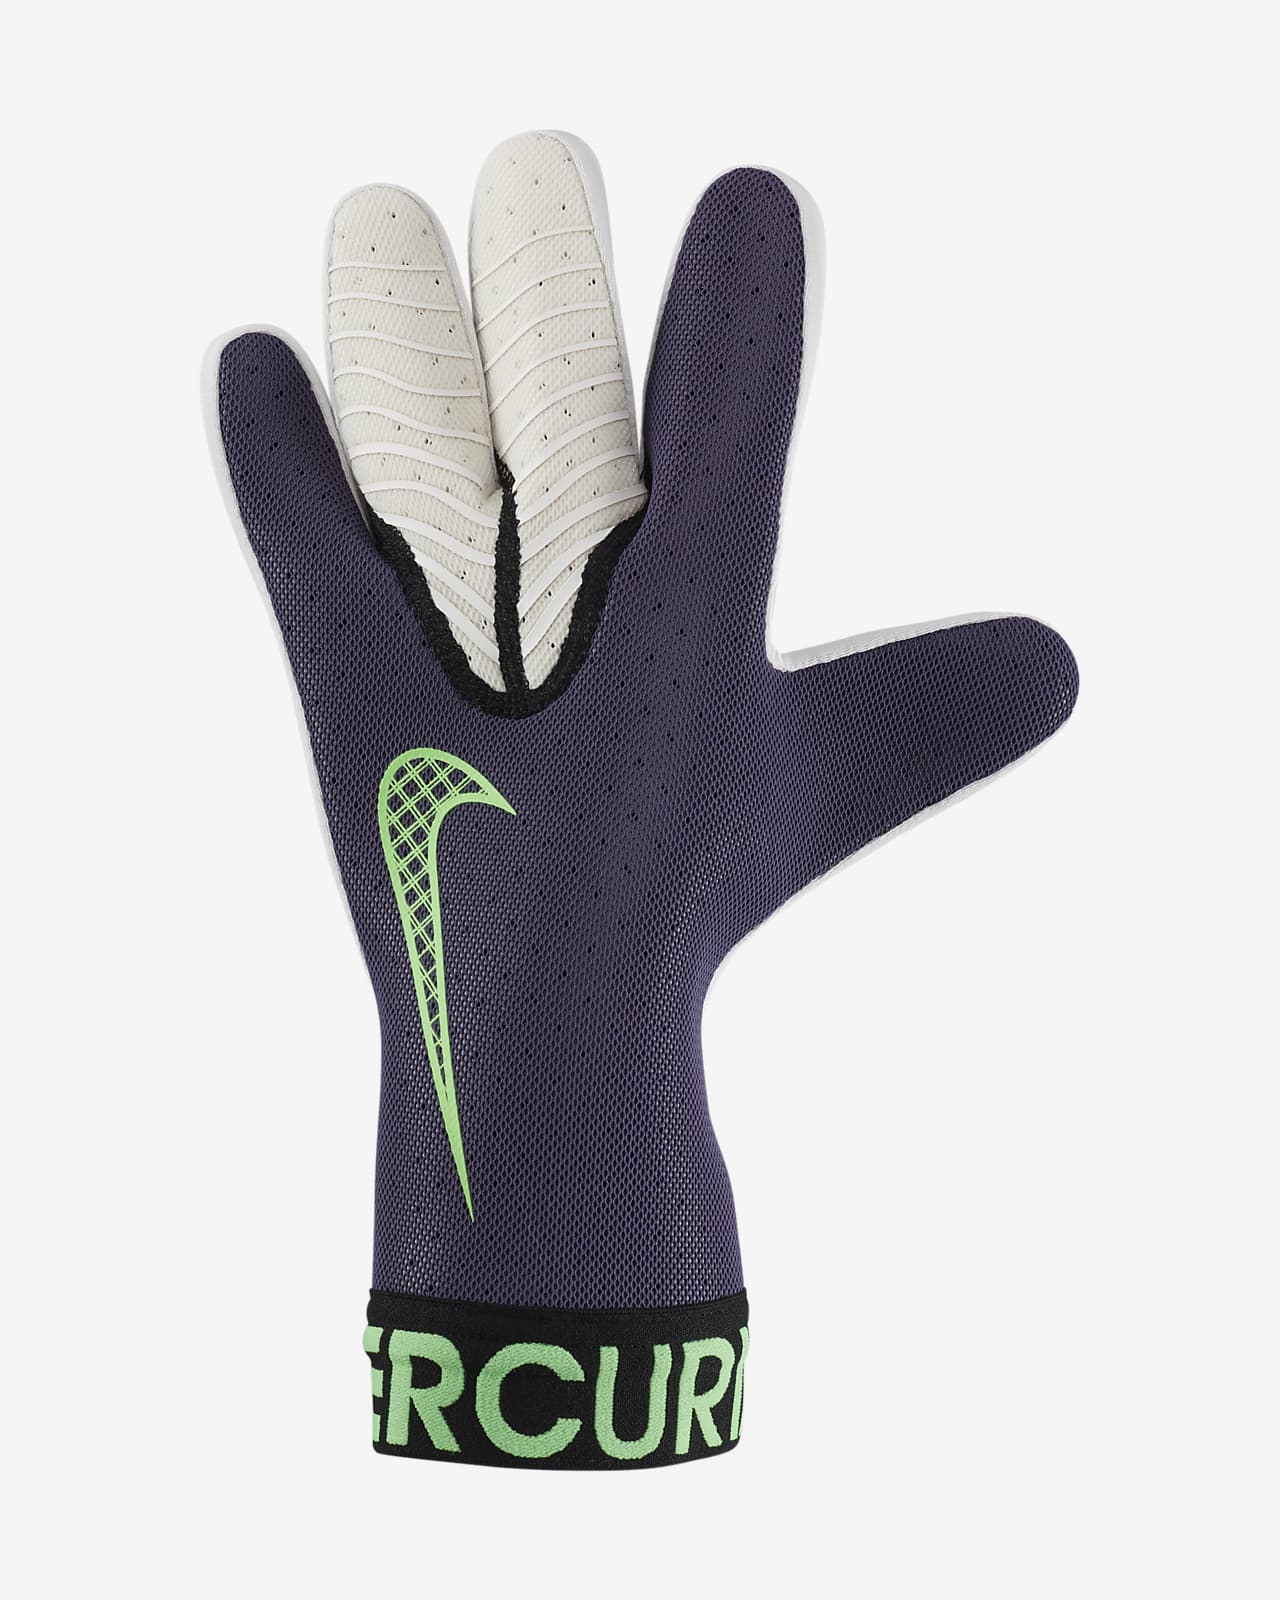 nike mercurial touch elite goalkeeper gloves